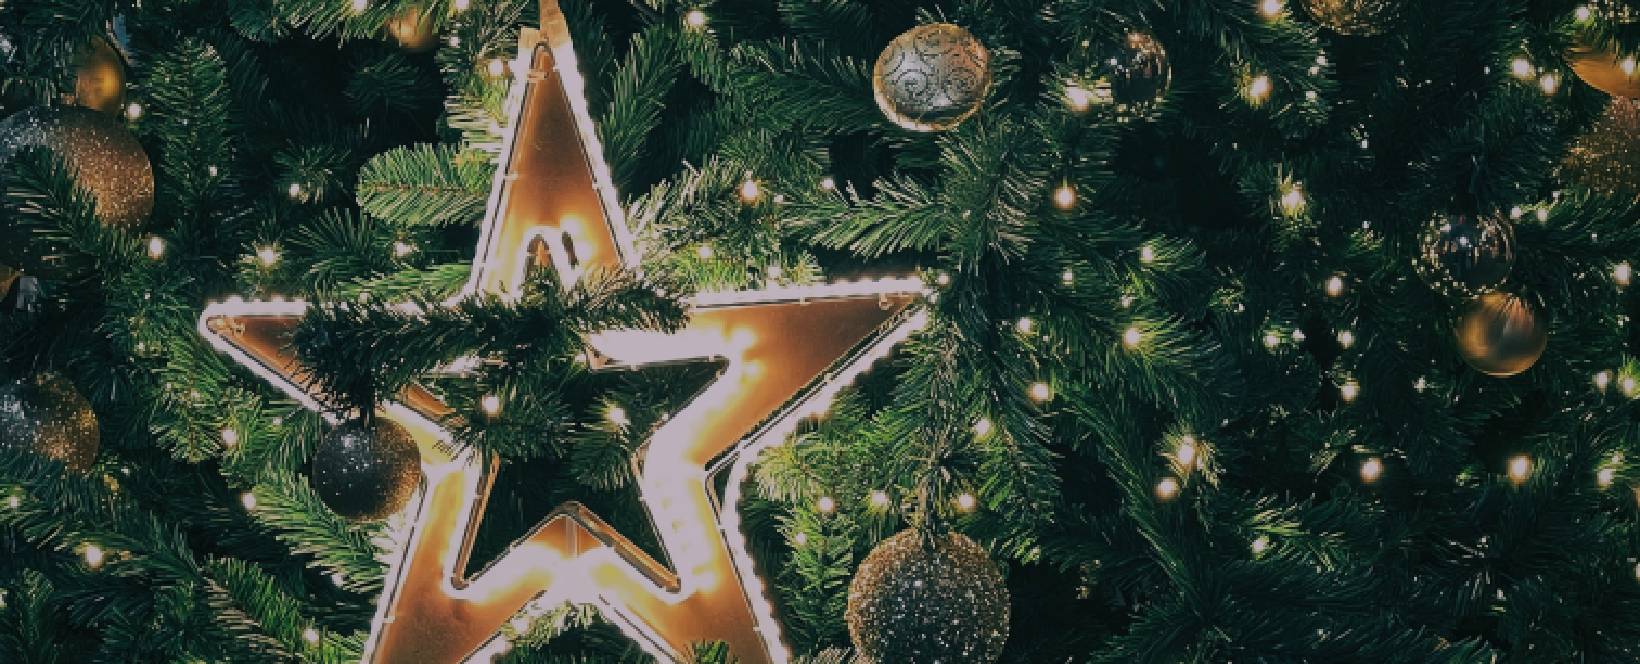 Sparkling Christmas Tree Ornaments